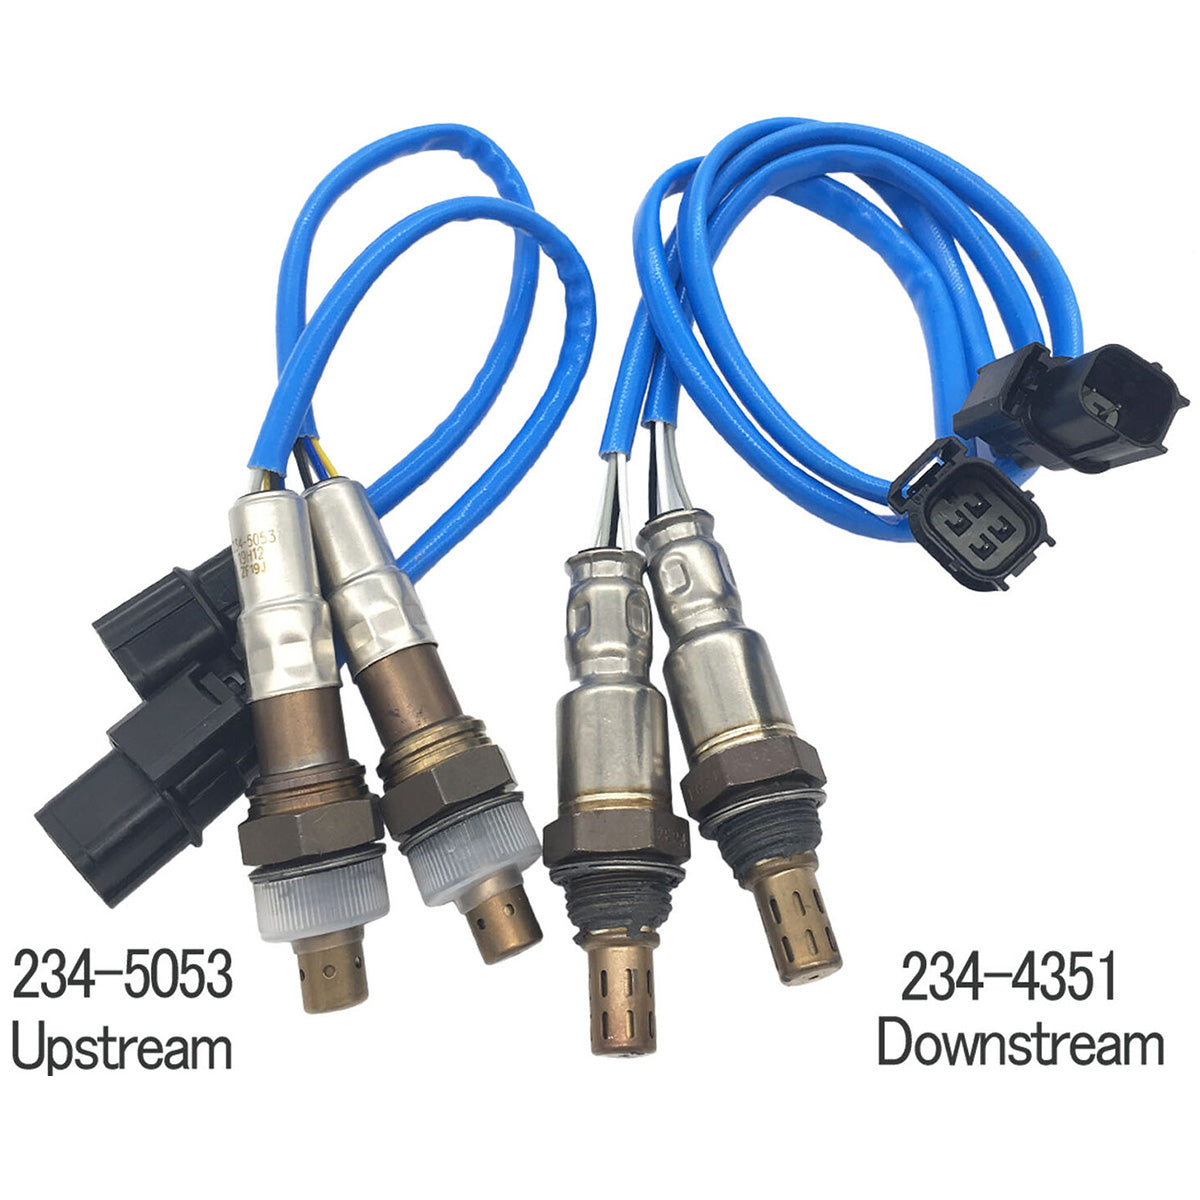 Up+Downstream Oxygen Sensor 234-5053 234-4351, Oxygen Sensor For 2007-2009 Acura, Car Oxygen Sensor, Auto Oxygen Sensor, Daysyore Oxygen Sensor